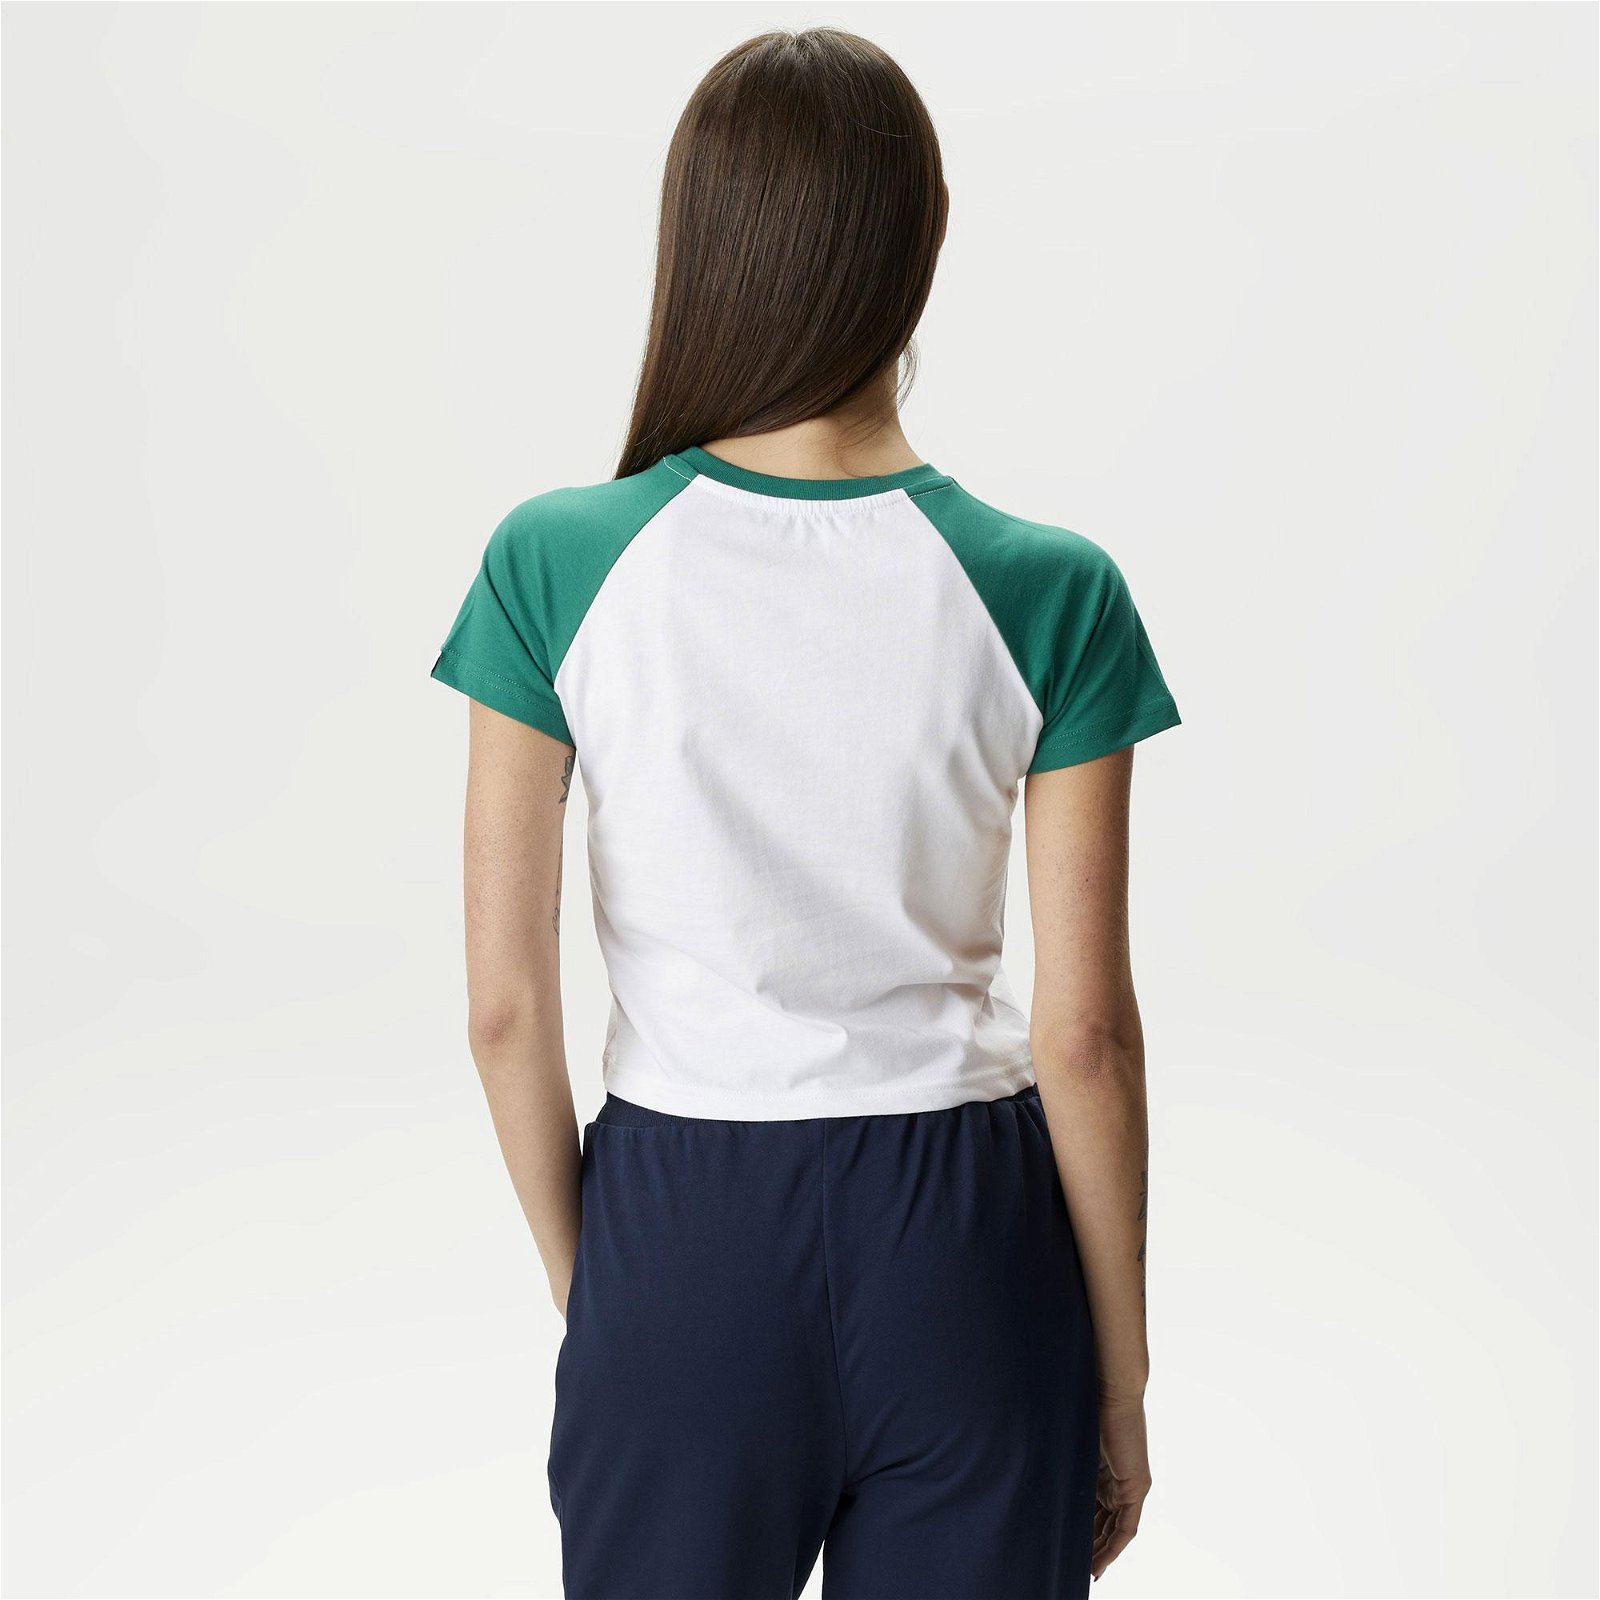 Ucla Carolina Kadın Yeşil T-Shirt